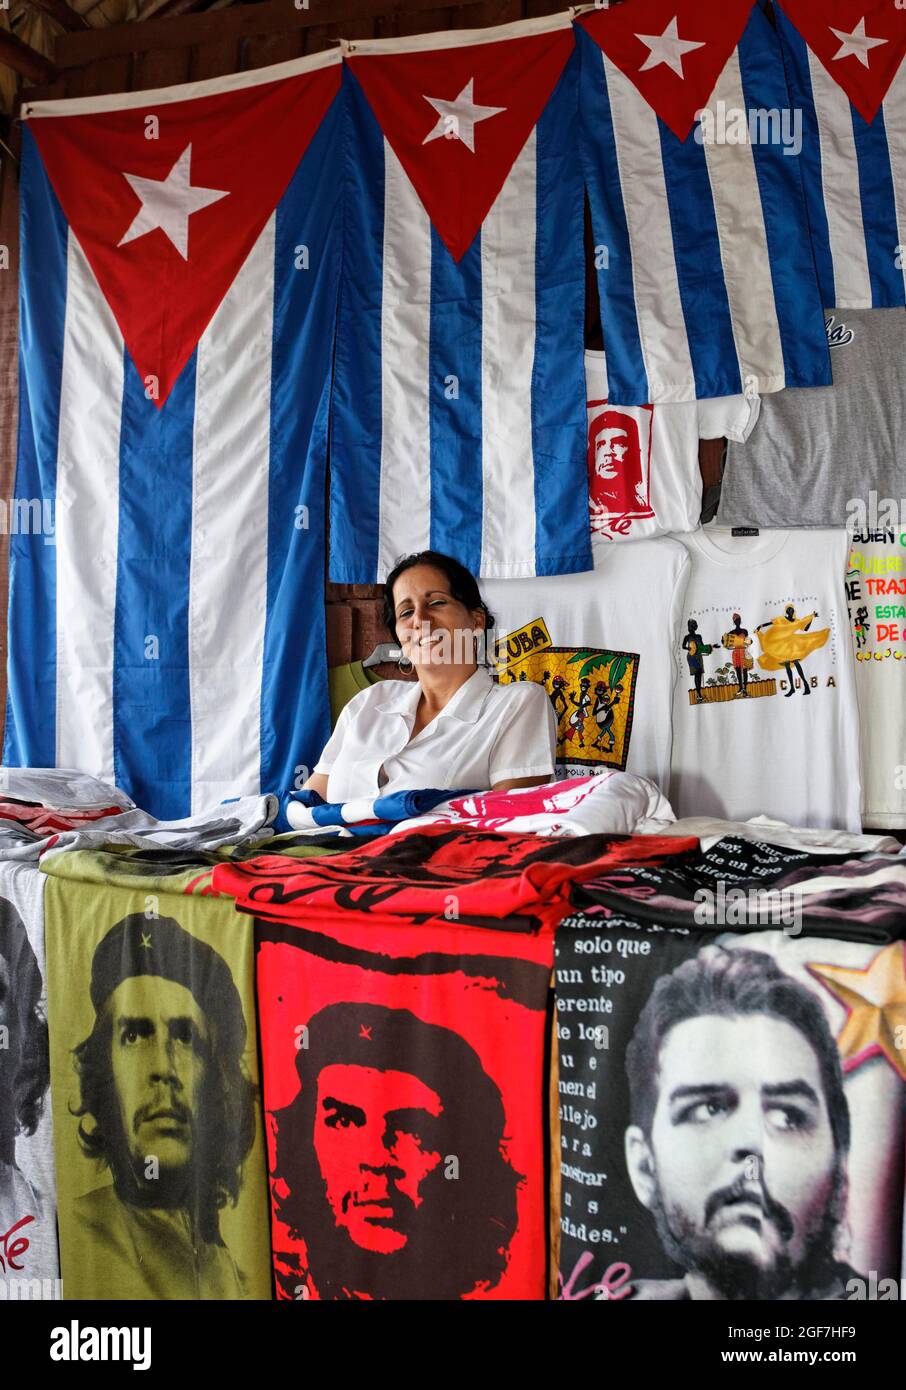 Che Guevara Store Men's Classic Alberto Korda Image Che T-shirt